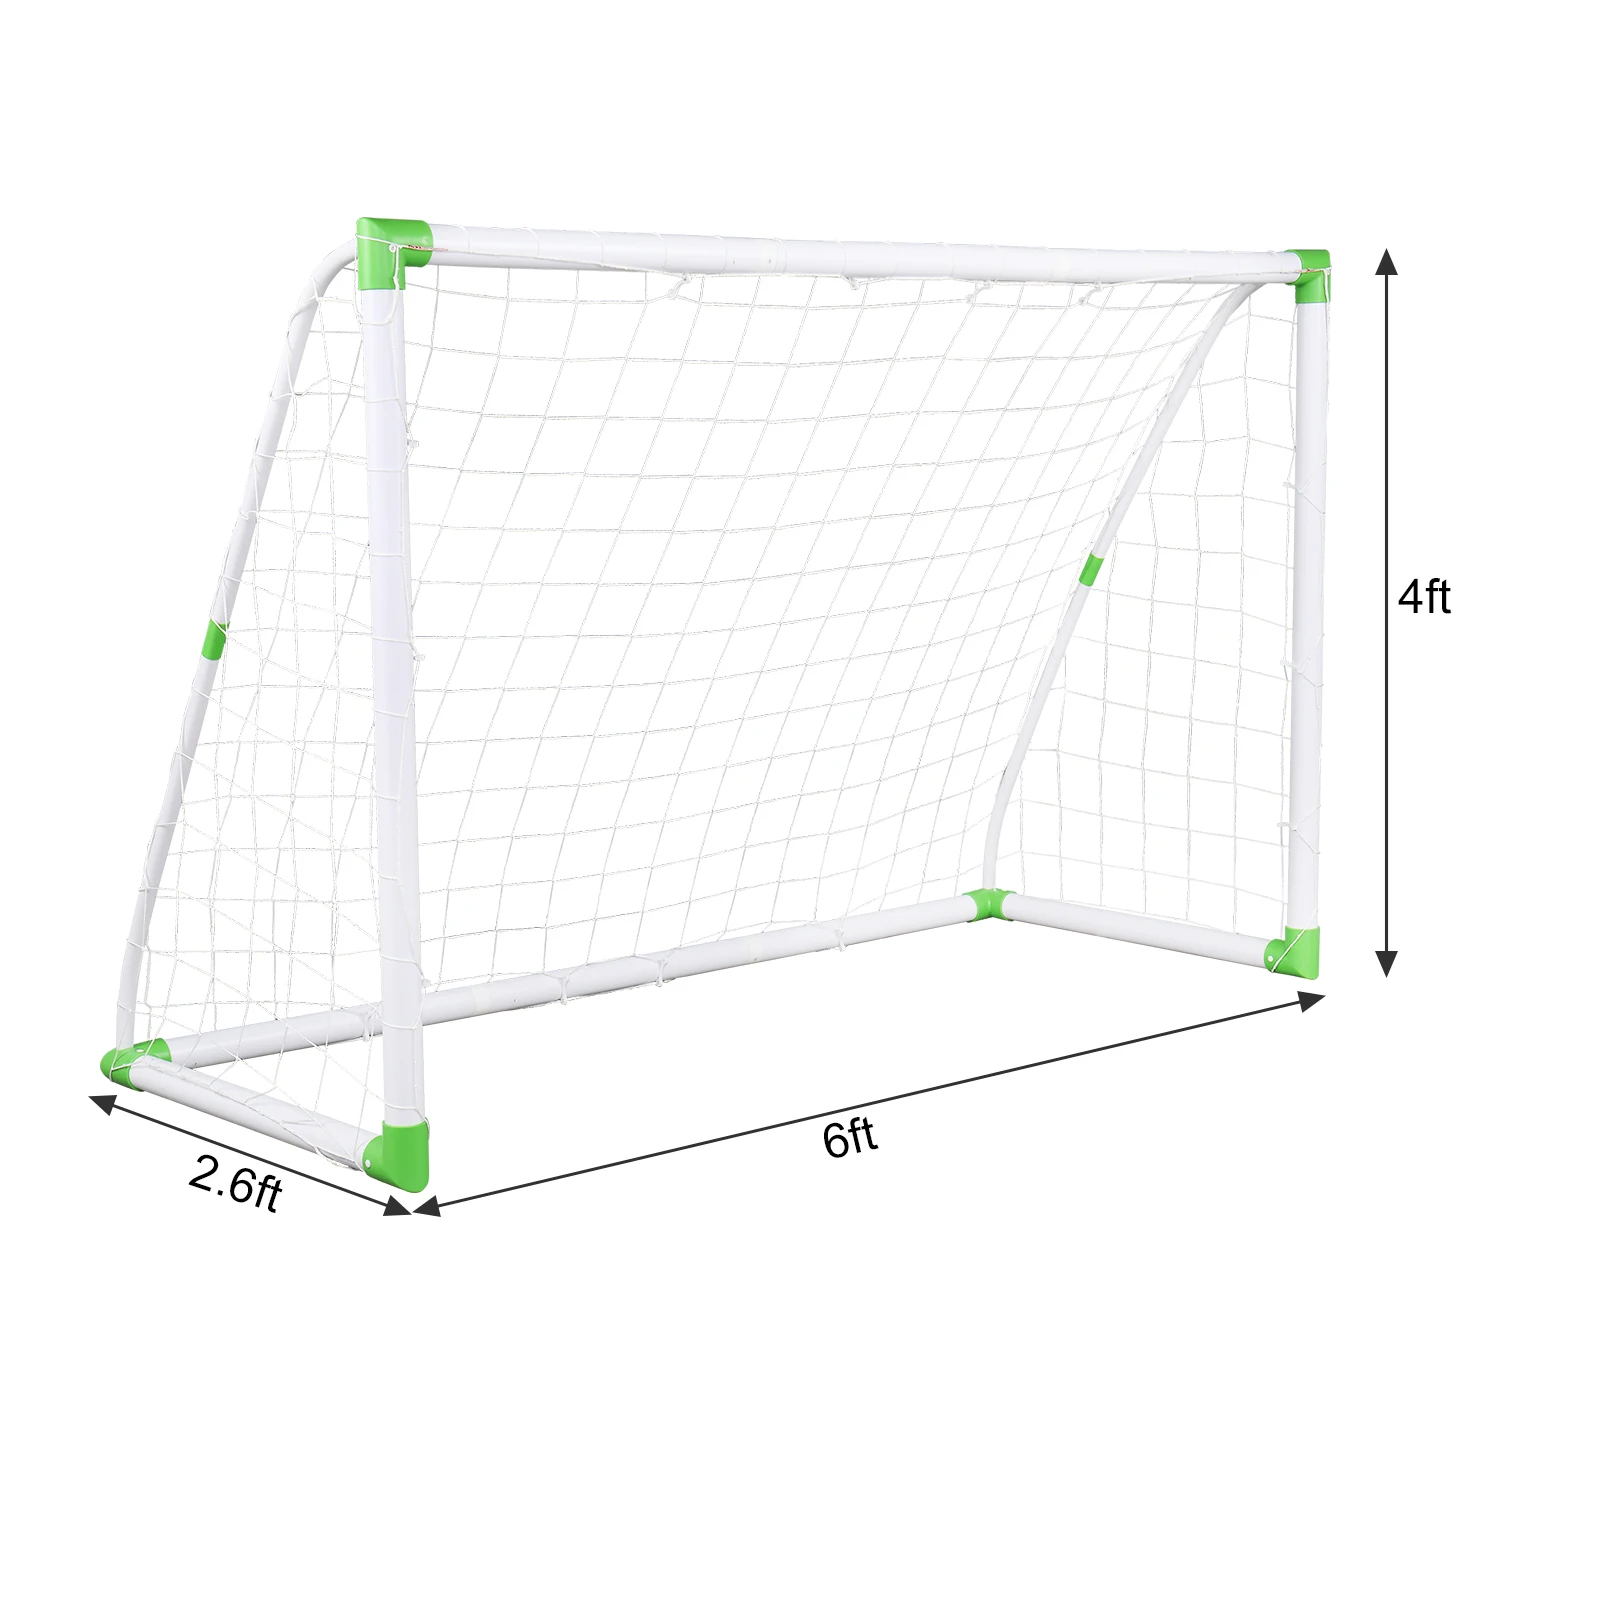 182x120x80cm Soccer Goal and Mesh Net PVC Tube Football Soccer Goal Set with Post Net For Team Sports Training Match Adult Kids